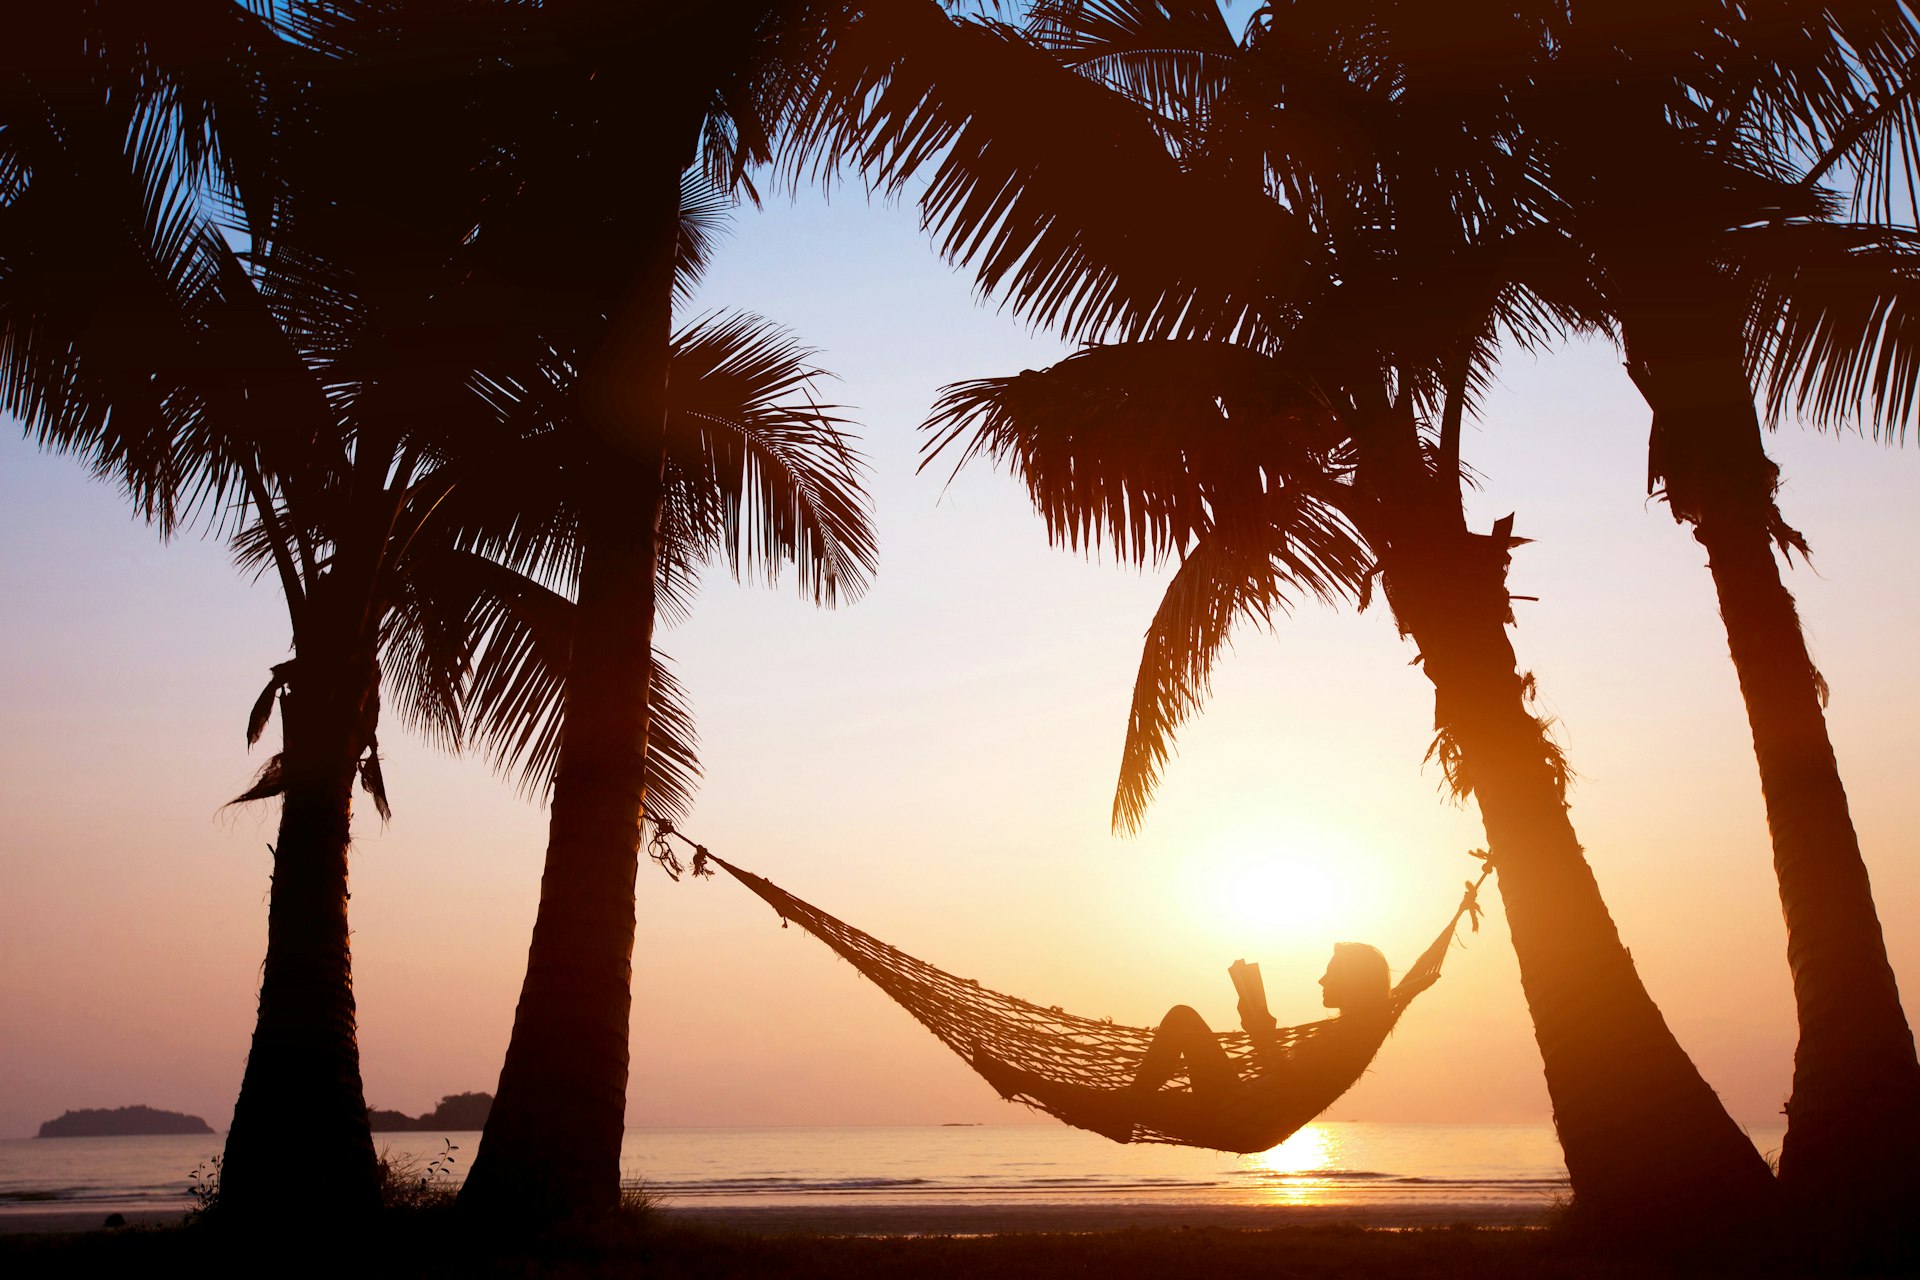 A figure relaxing in a beach hammock, backlit by the sun